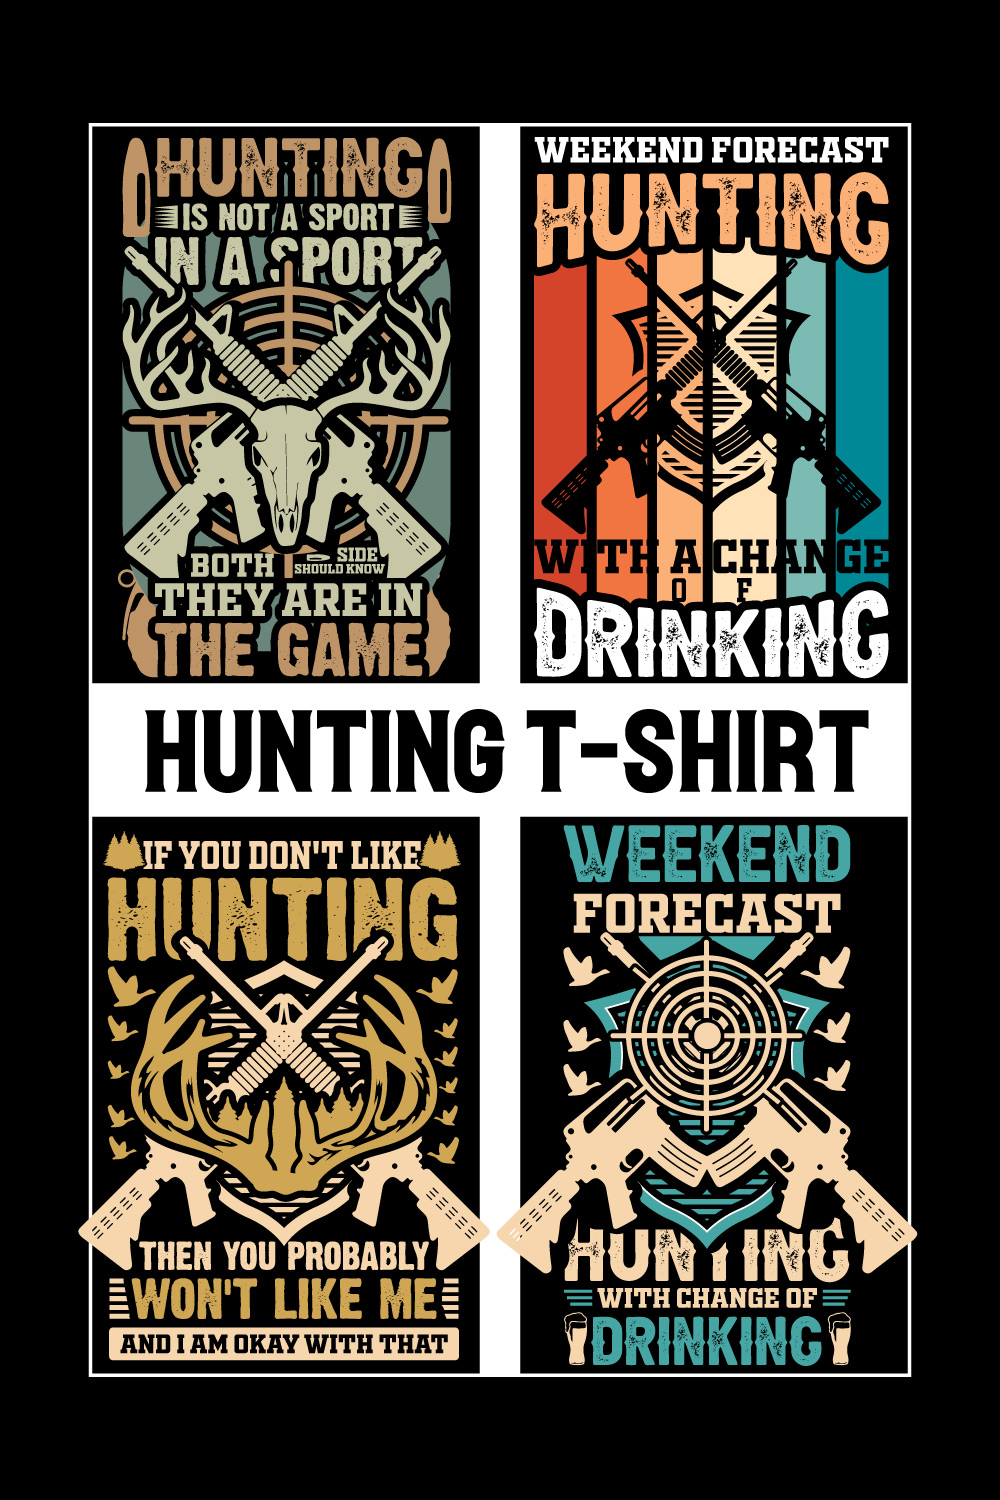 Hunting T-shirt- Hunting Shirts- Hunter retro vintage deer hunting t-shirt design- Deer hunting t shirt design pinterest preview image.